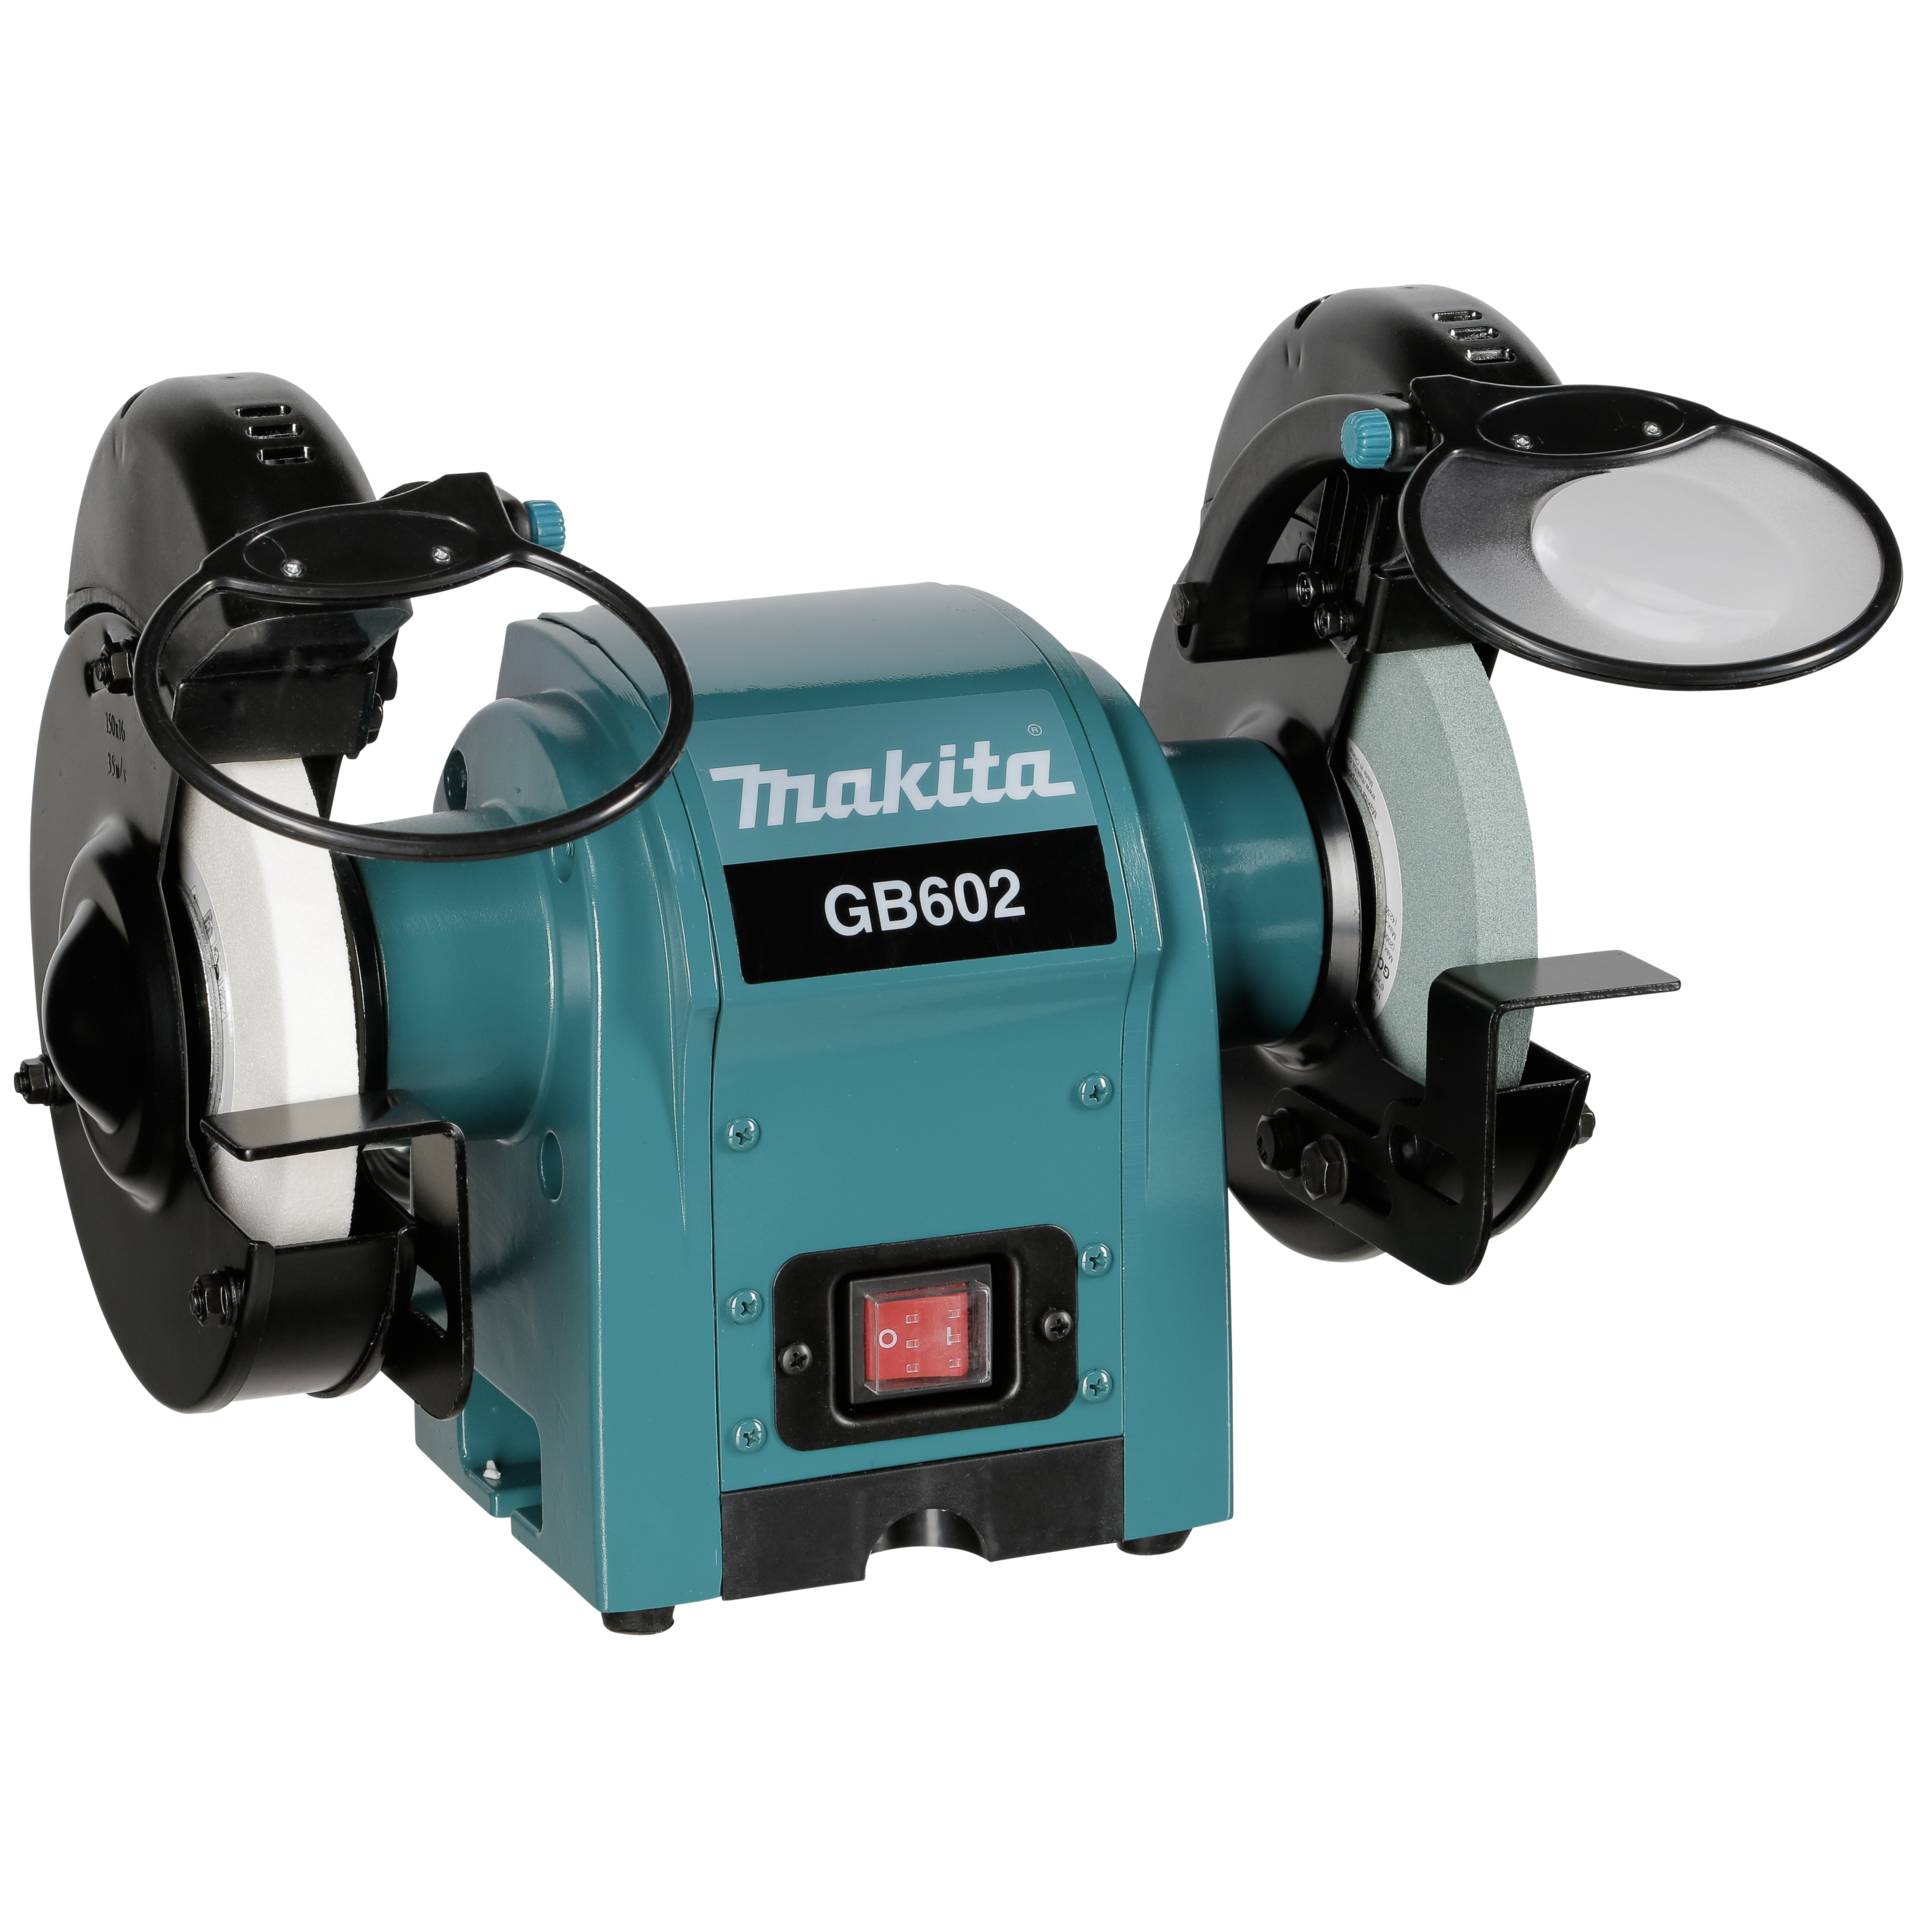 -GB602 -Makita Doppelschleifer Makita Hardware/Electronic